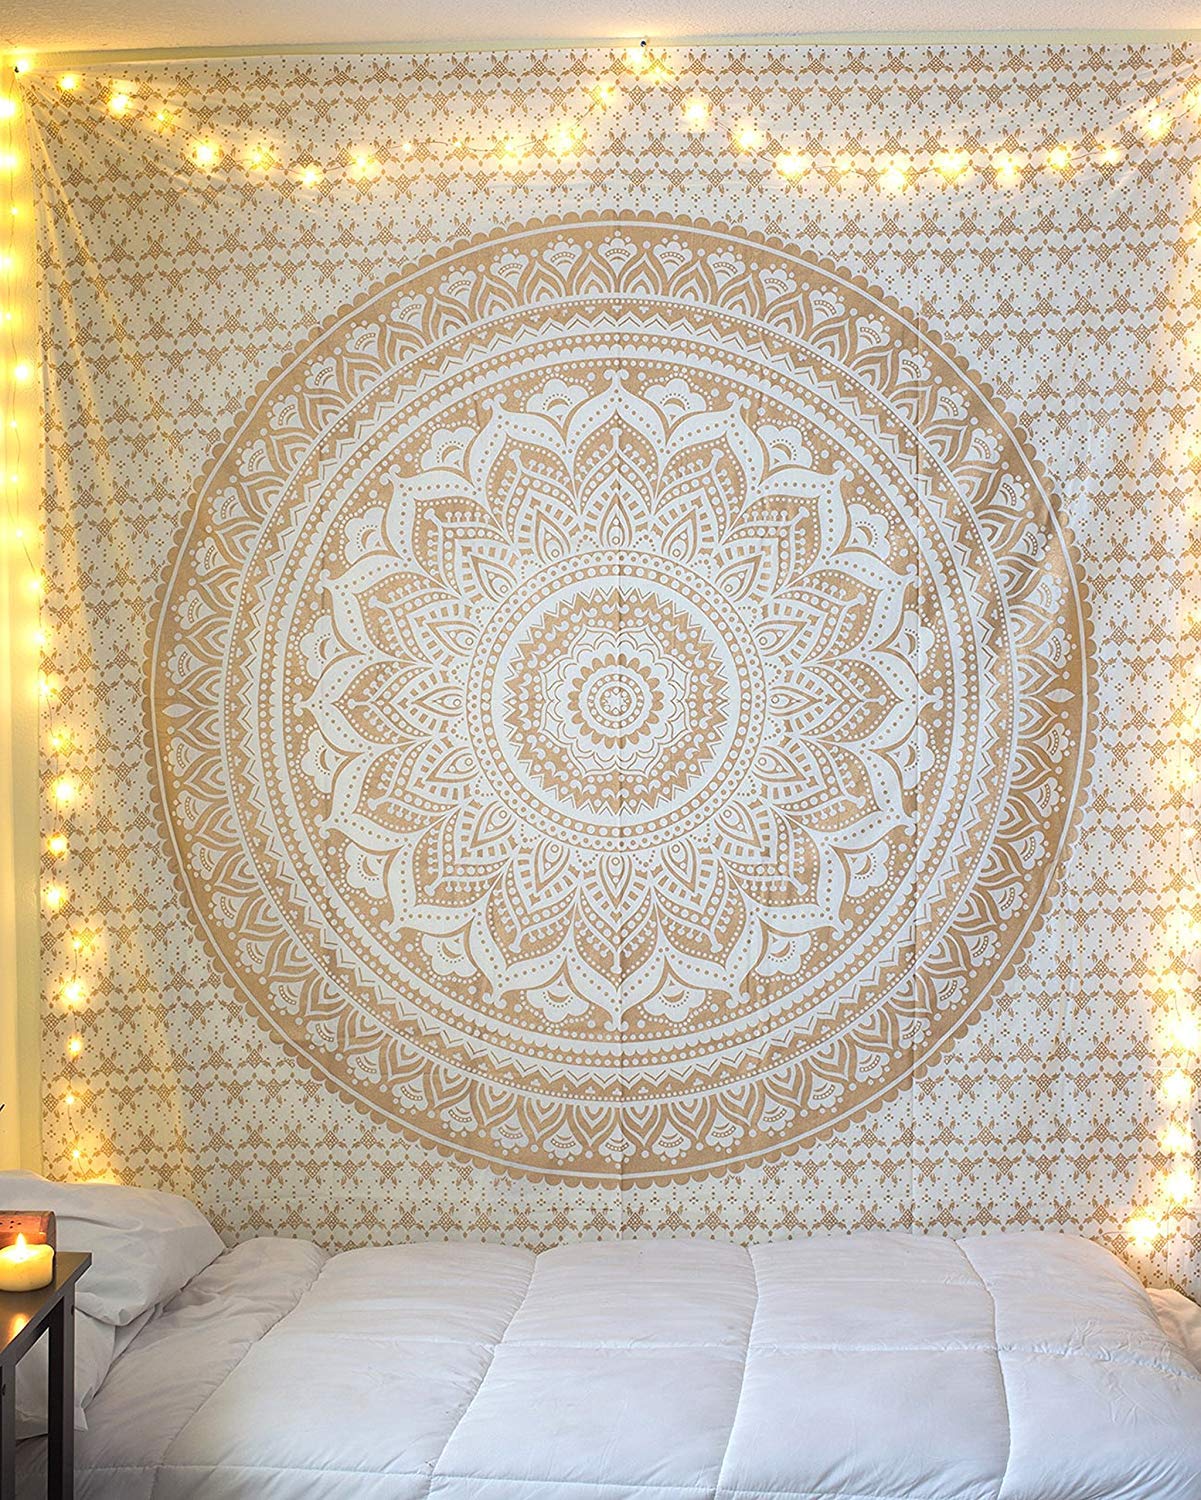 Bohemian Mandala Tapestry Wall Bedspread Throw Blanket Hanging Cover Decor 